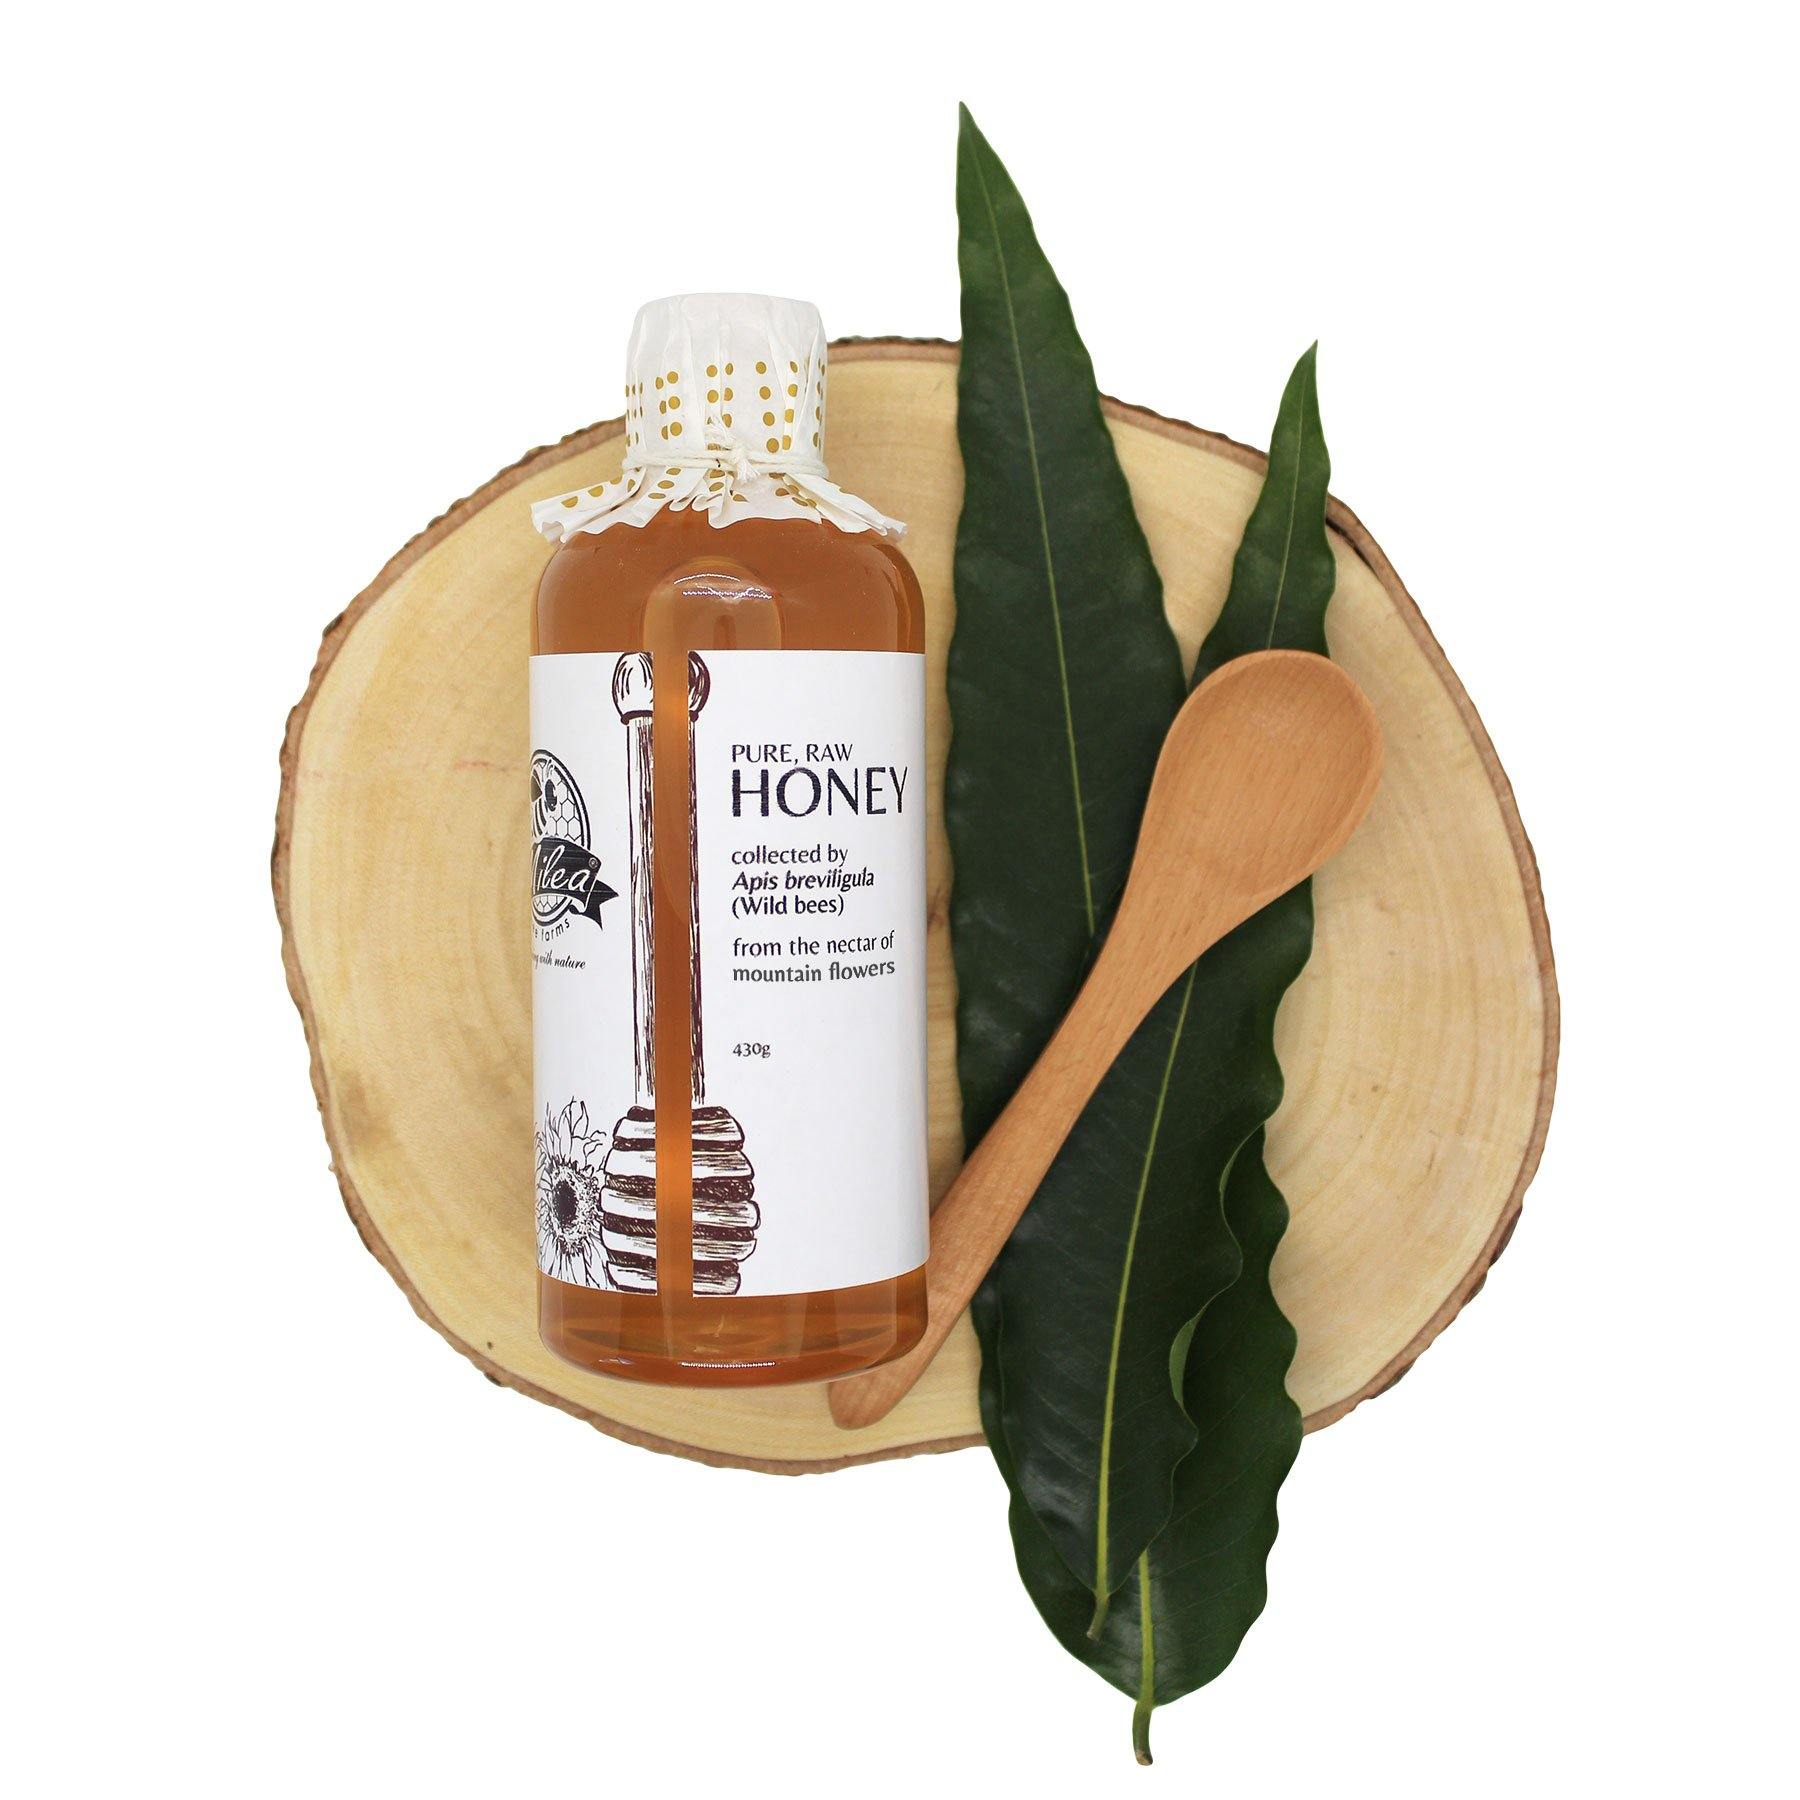 100% Pure, Raw Multifloral Honey - Milea All Organics - Philippines